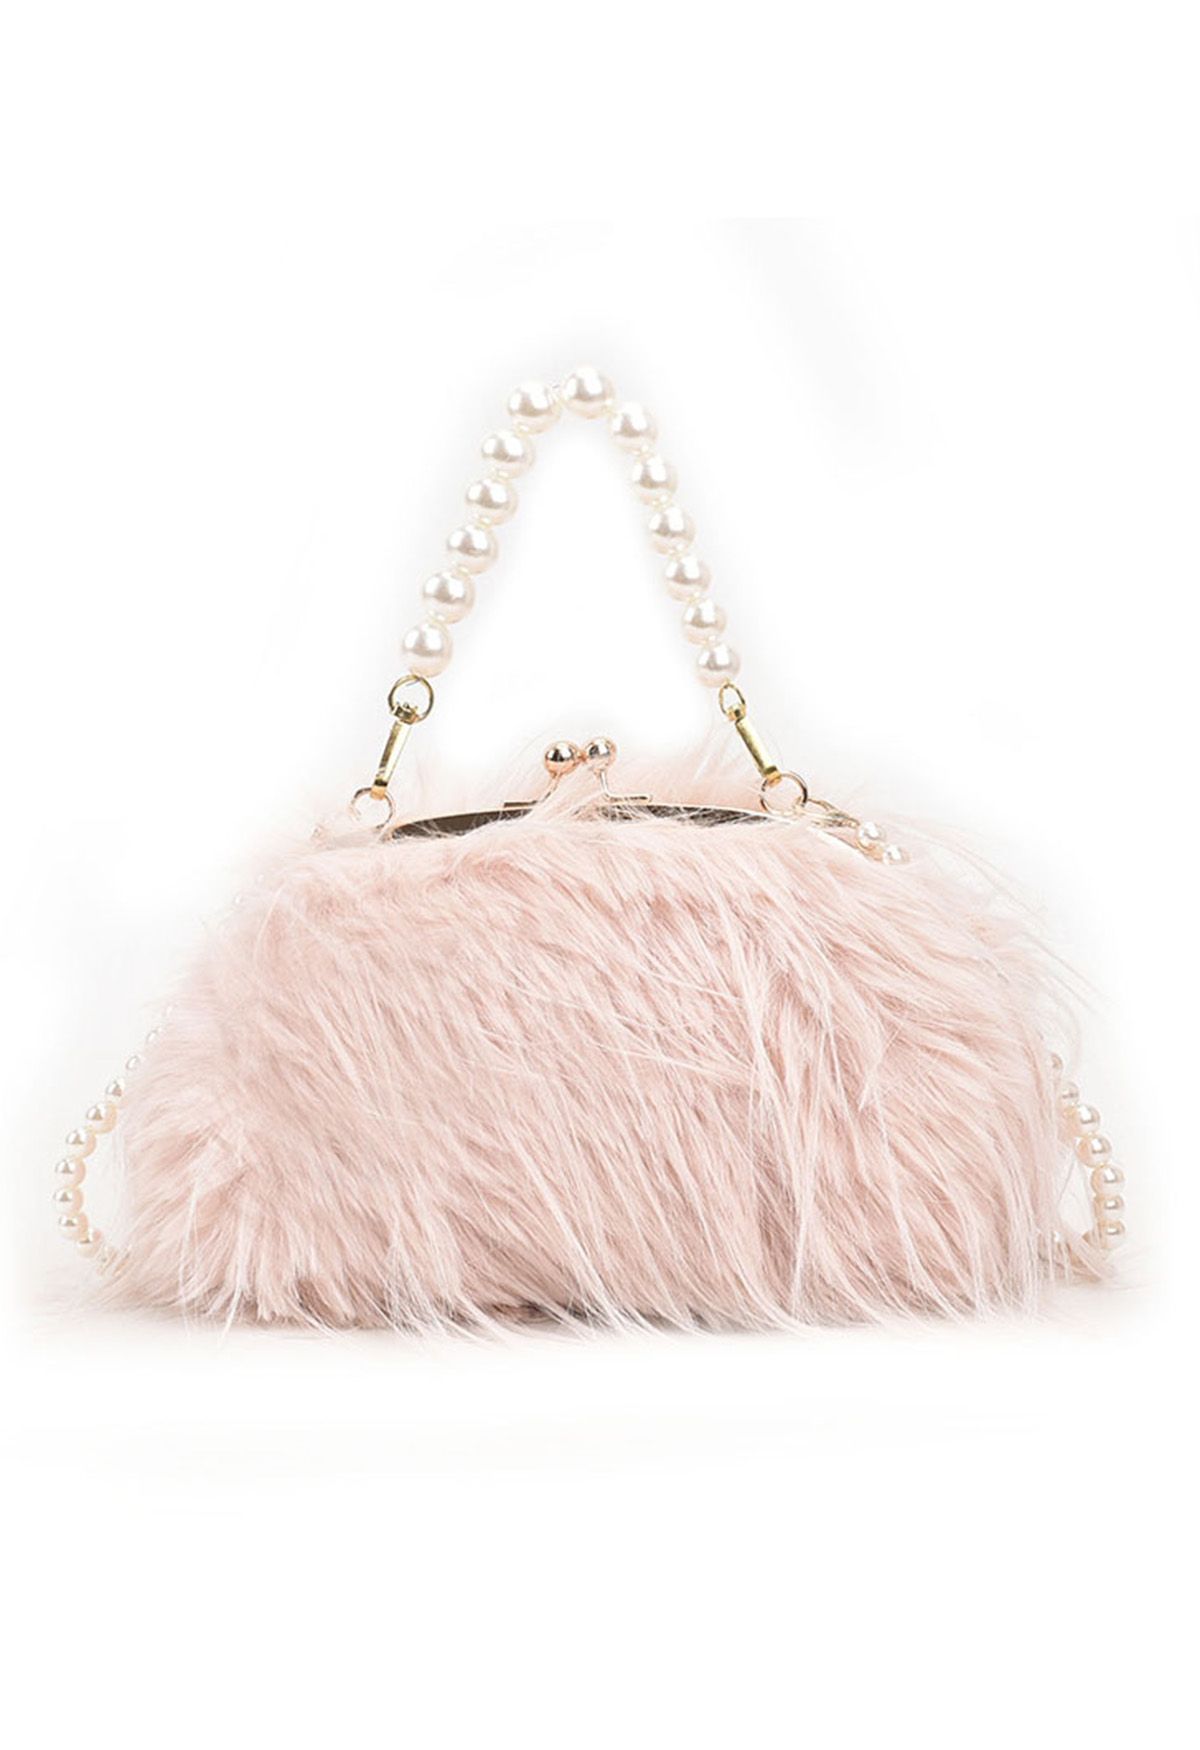 Alluring Pearl Fuzzy Handbag in Light Pink - Retro, Indie and Unique ...